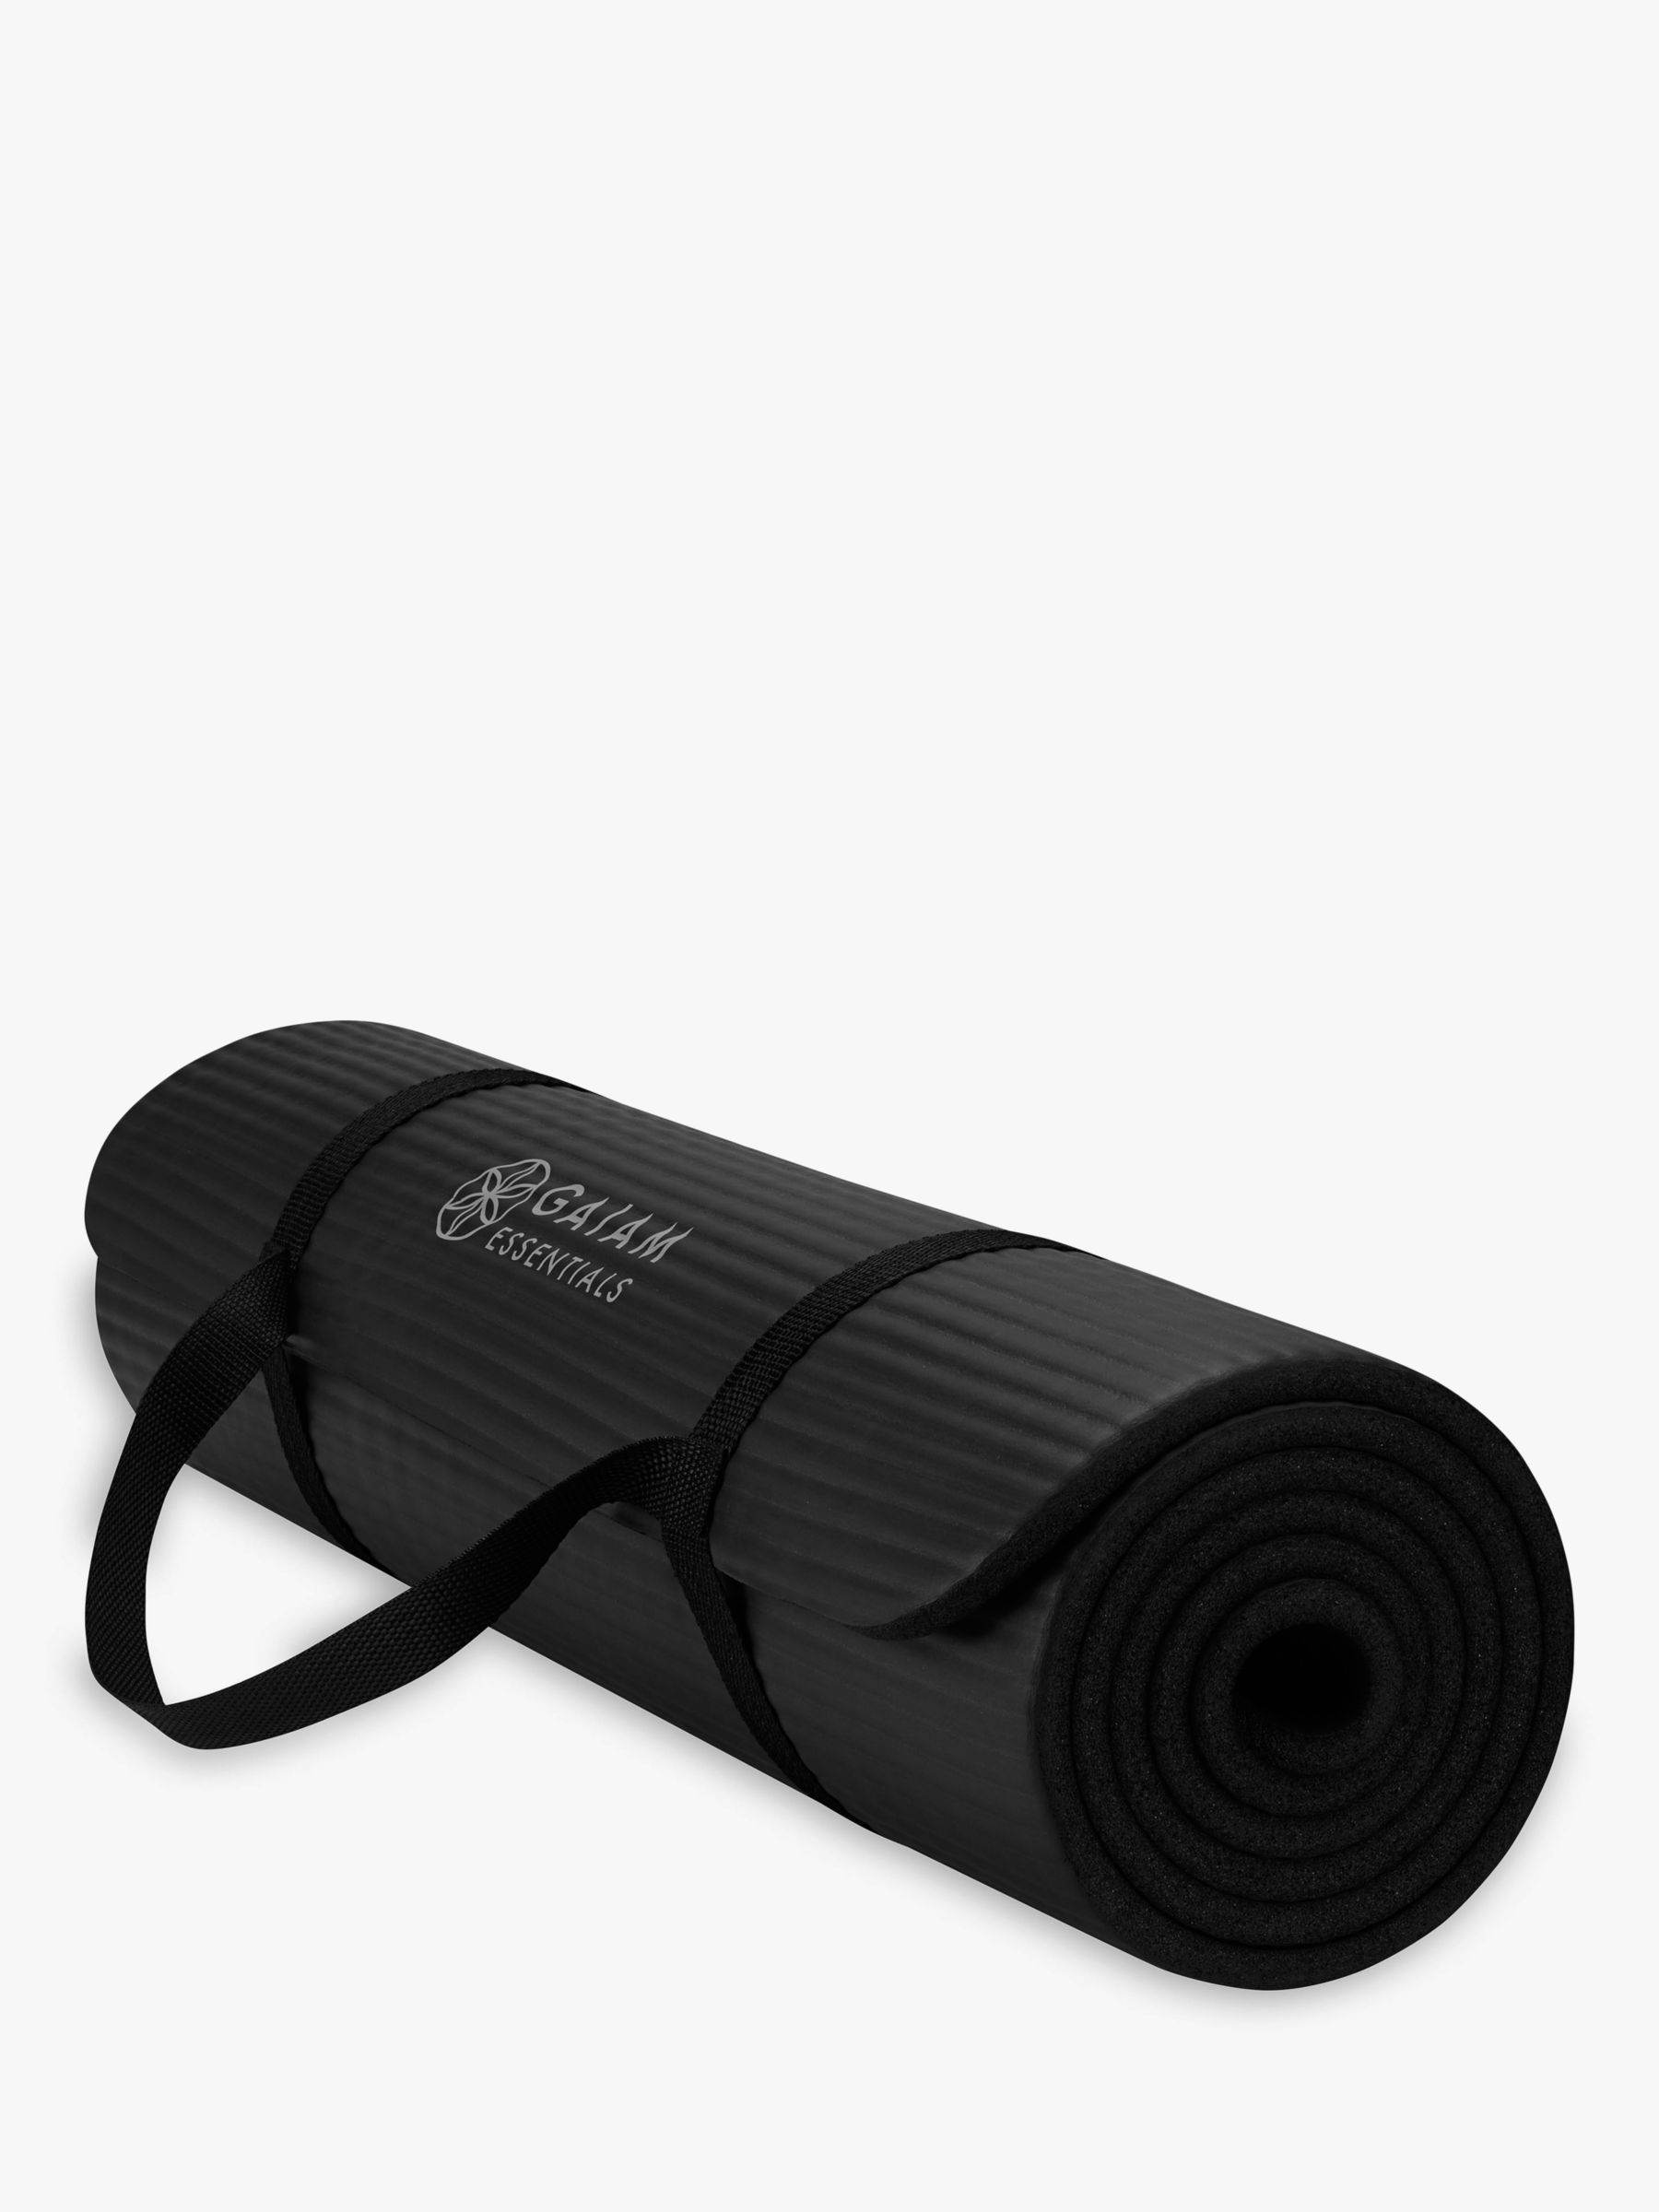 Gaiam Fitness Mat (10MM) in Black